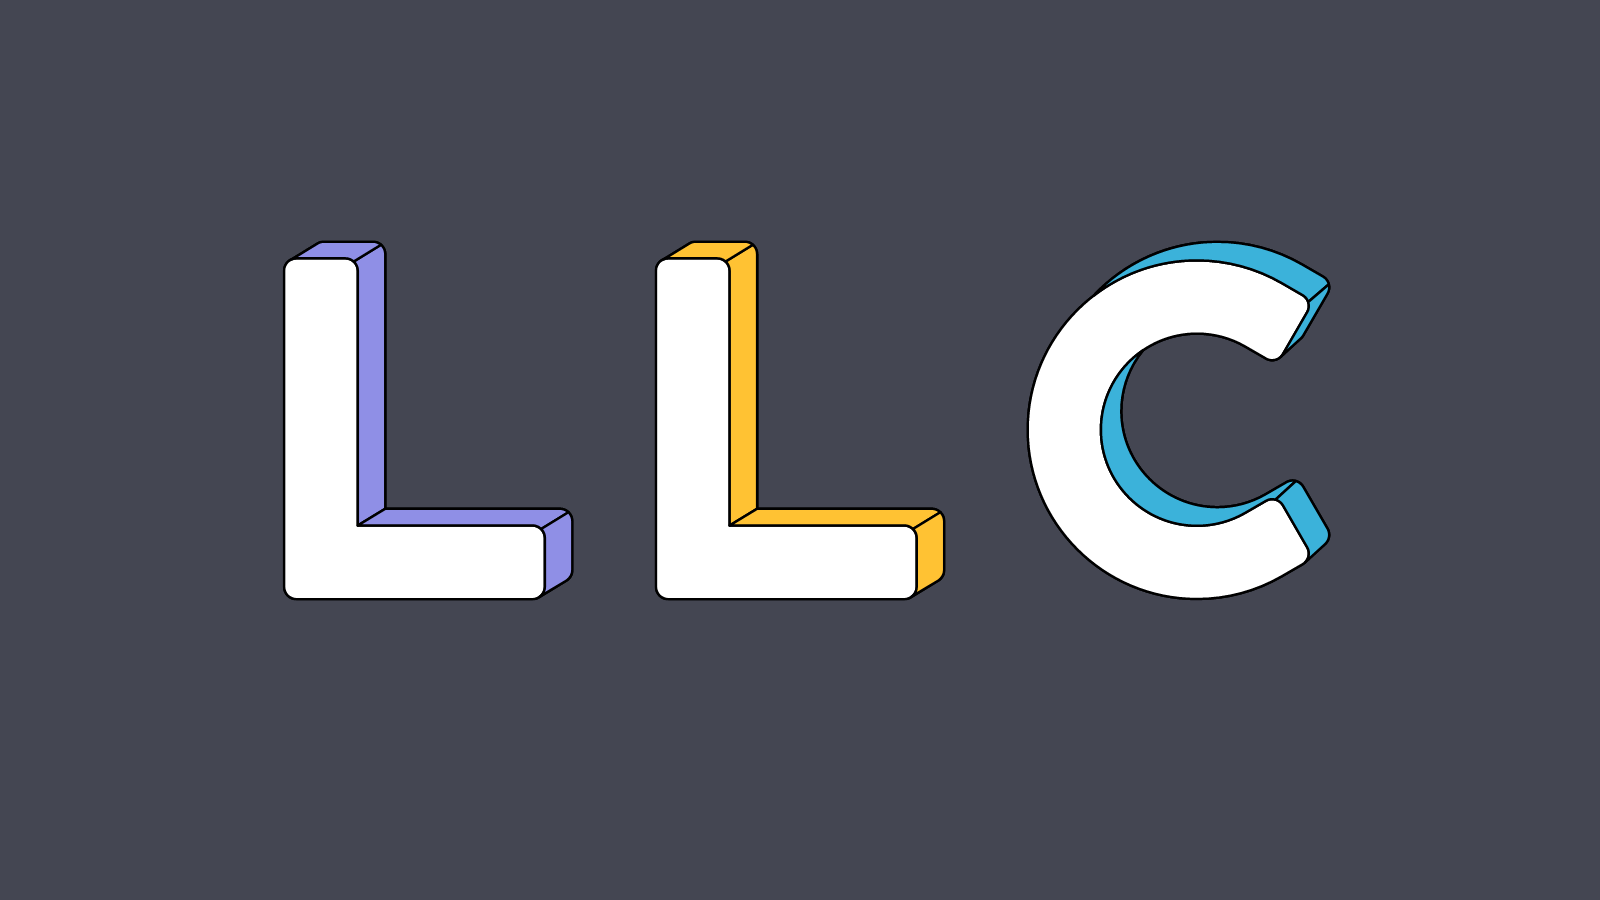 LLC in 3-D letters